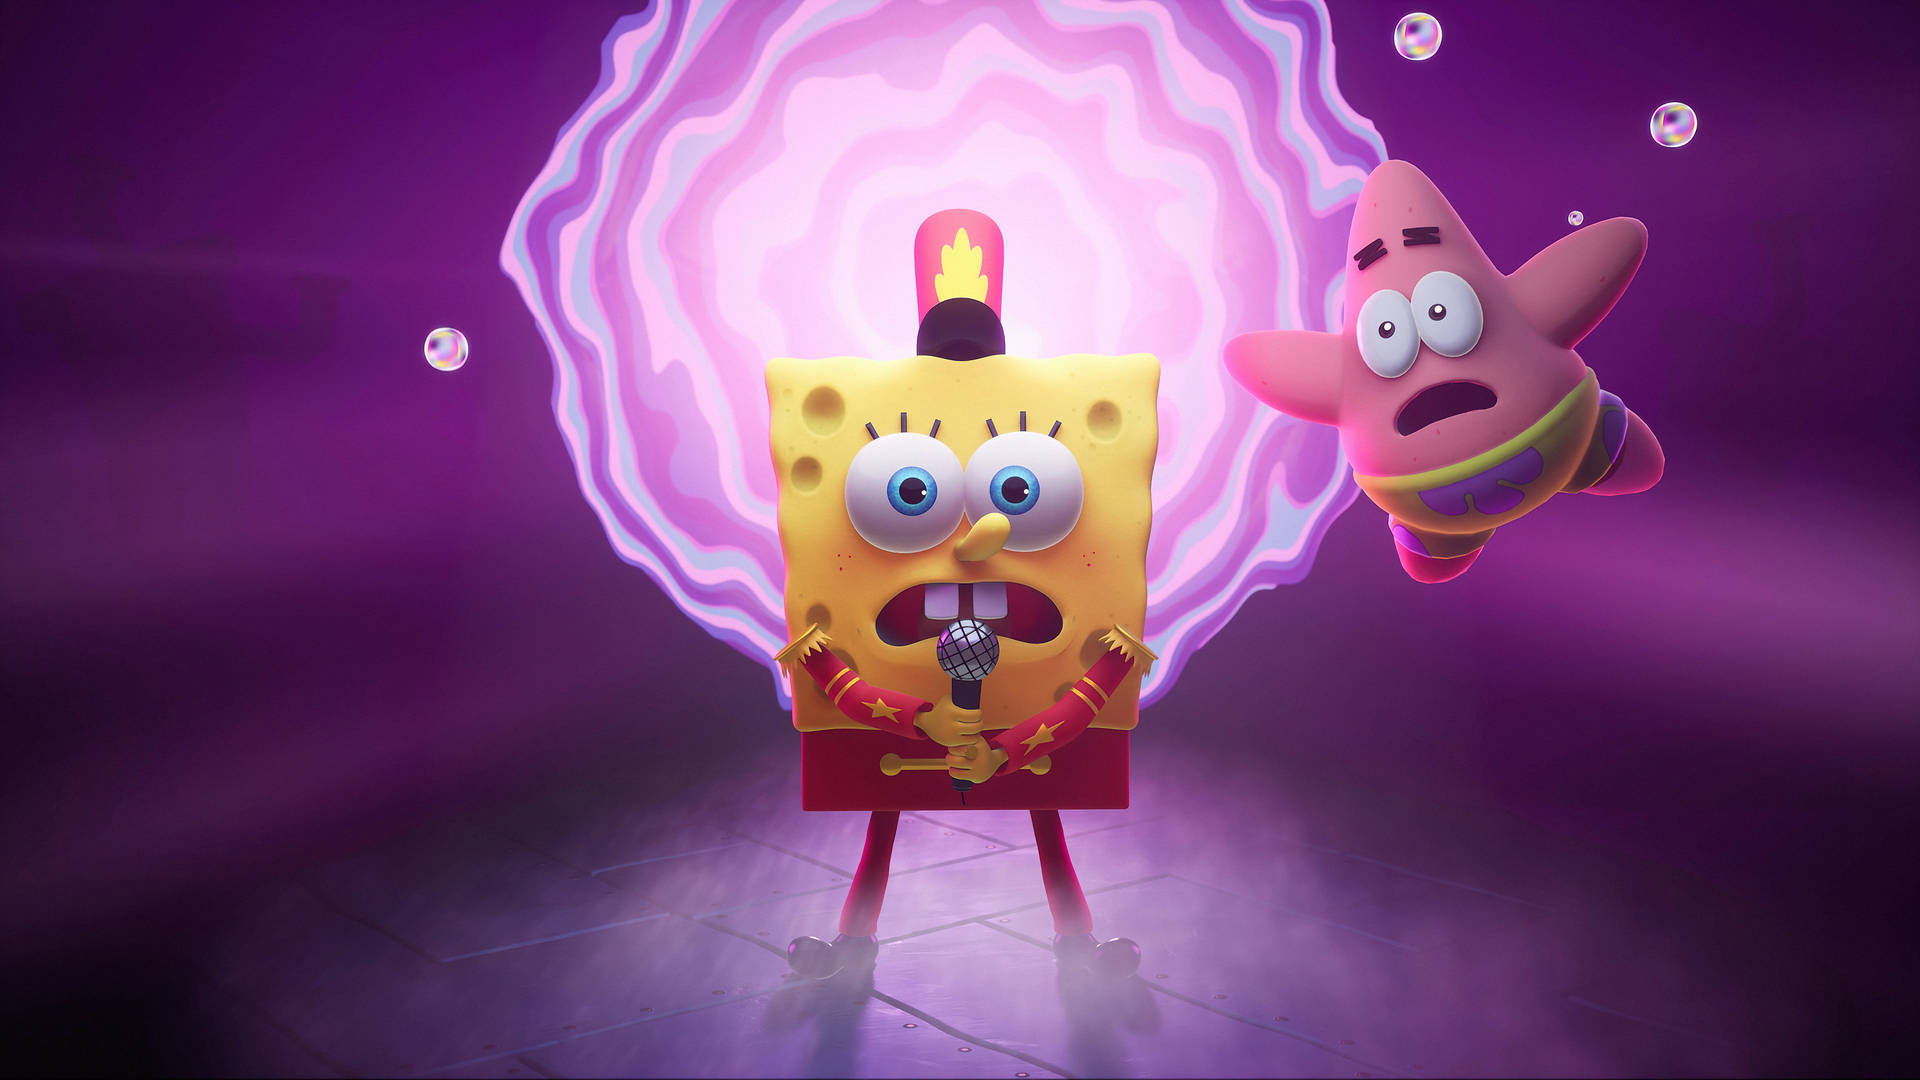 Spongebob Cool Singing Concert Rockstar